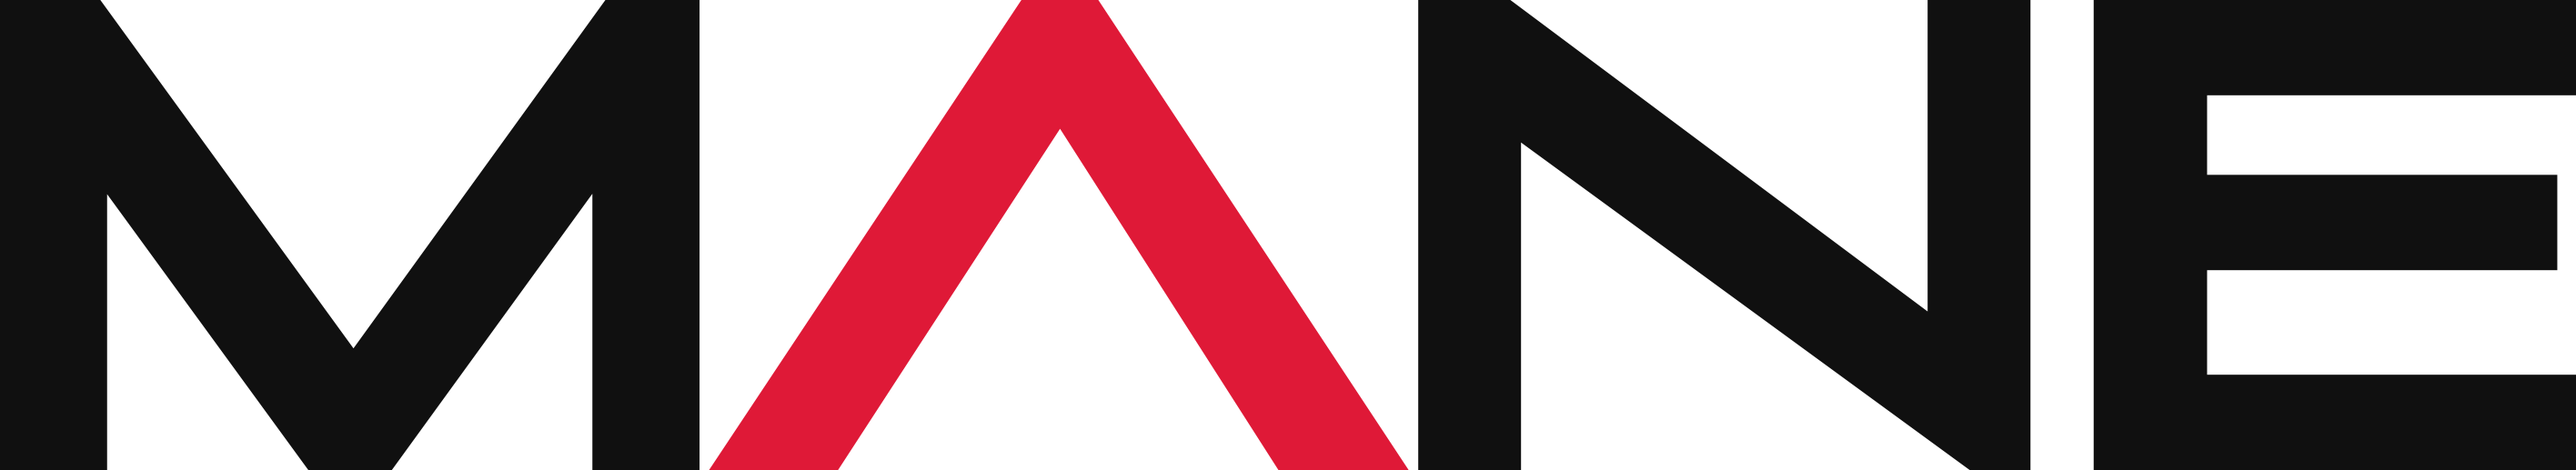 Mane Contract Services Logo